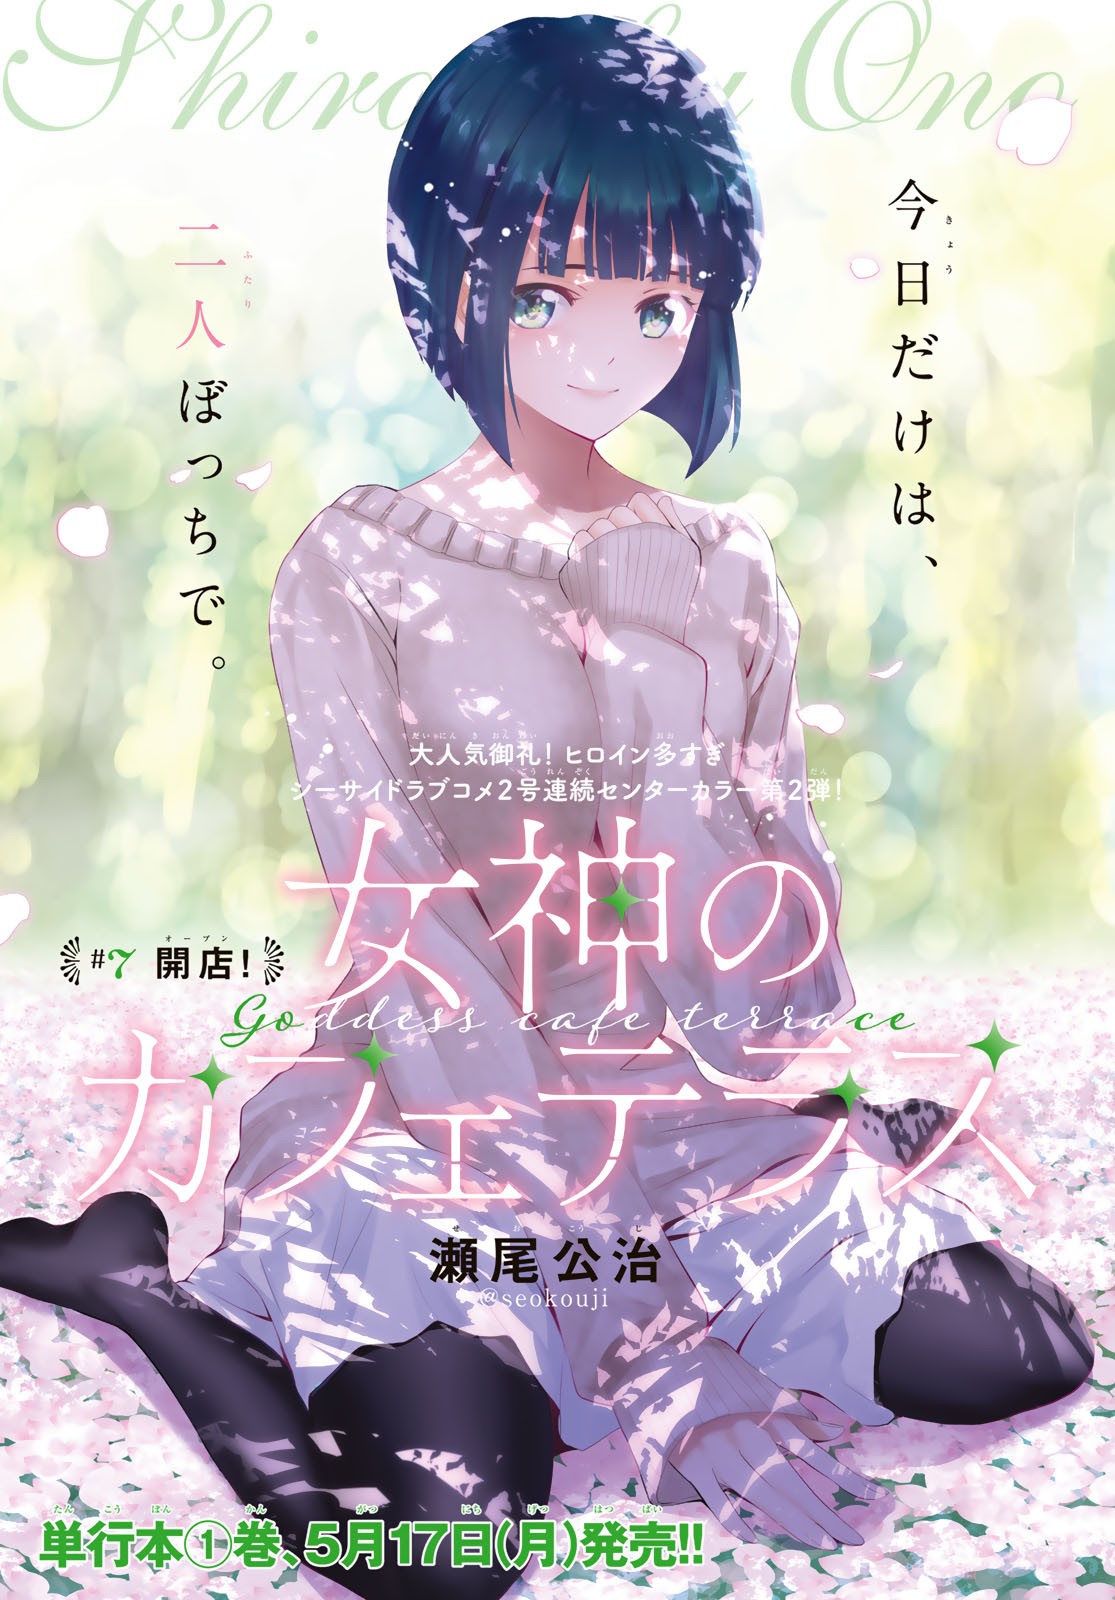 The Café Terrace and Its Goddesses Anime Introduces Shiragiku Ono